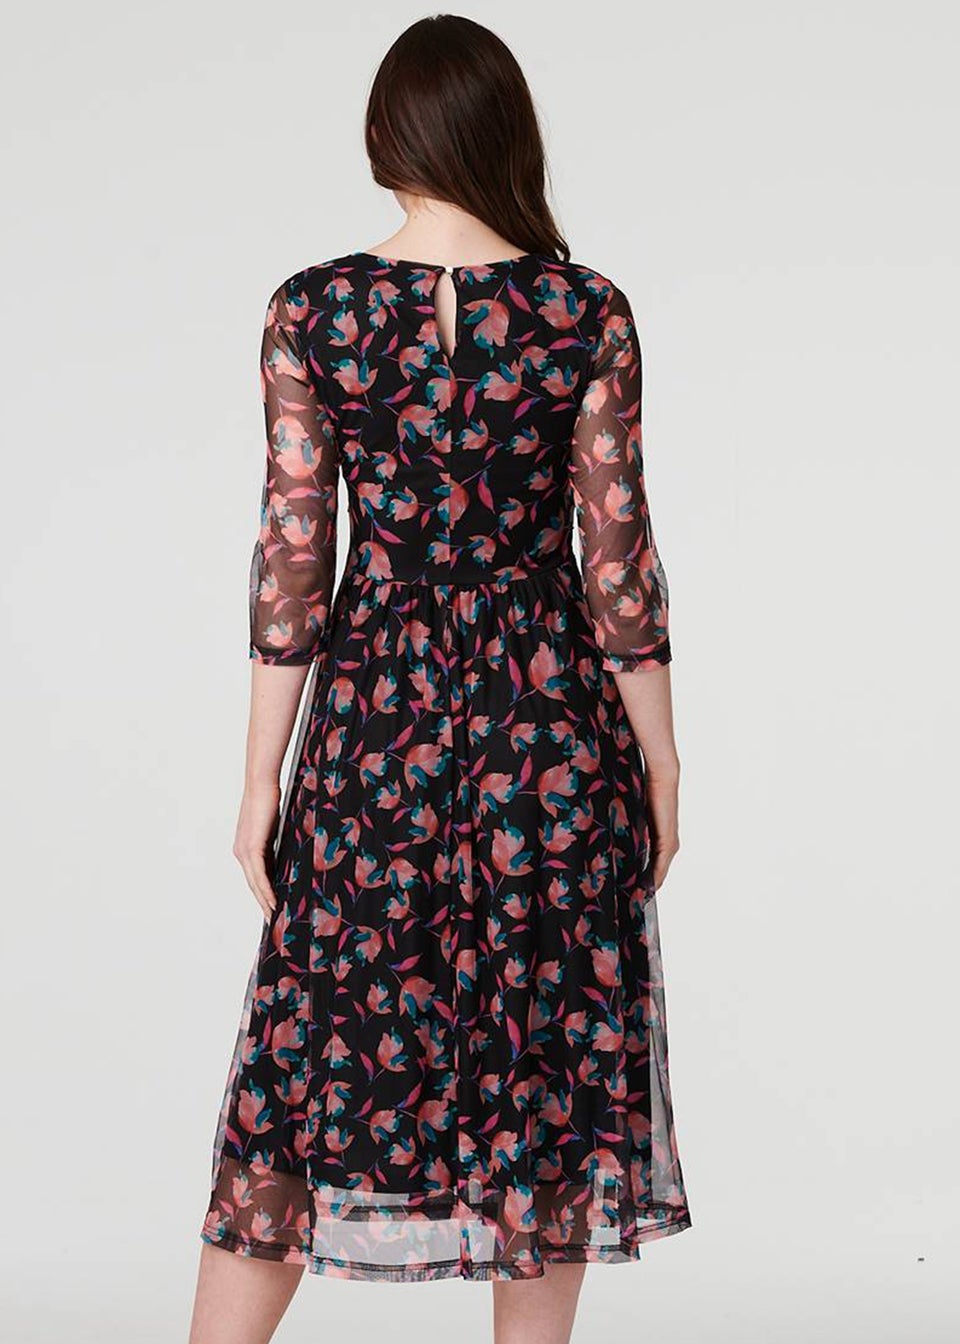 Izabel London Black Floral Semi Sheer Ruched Midi Dress